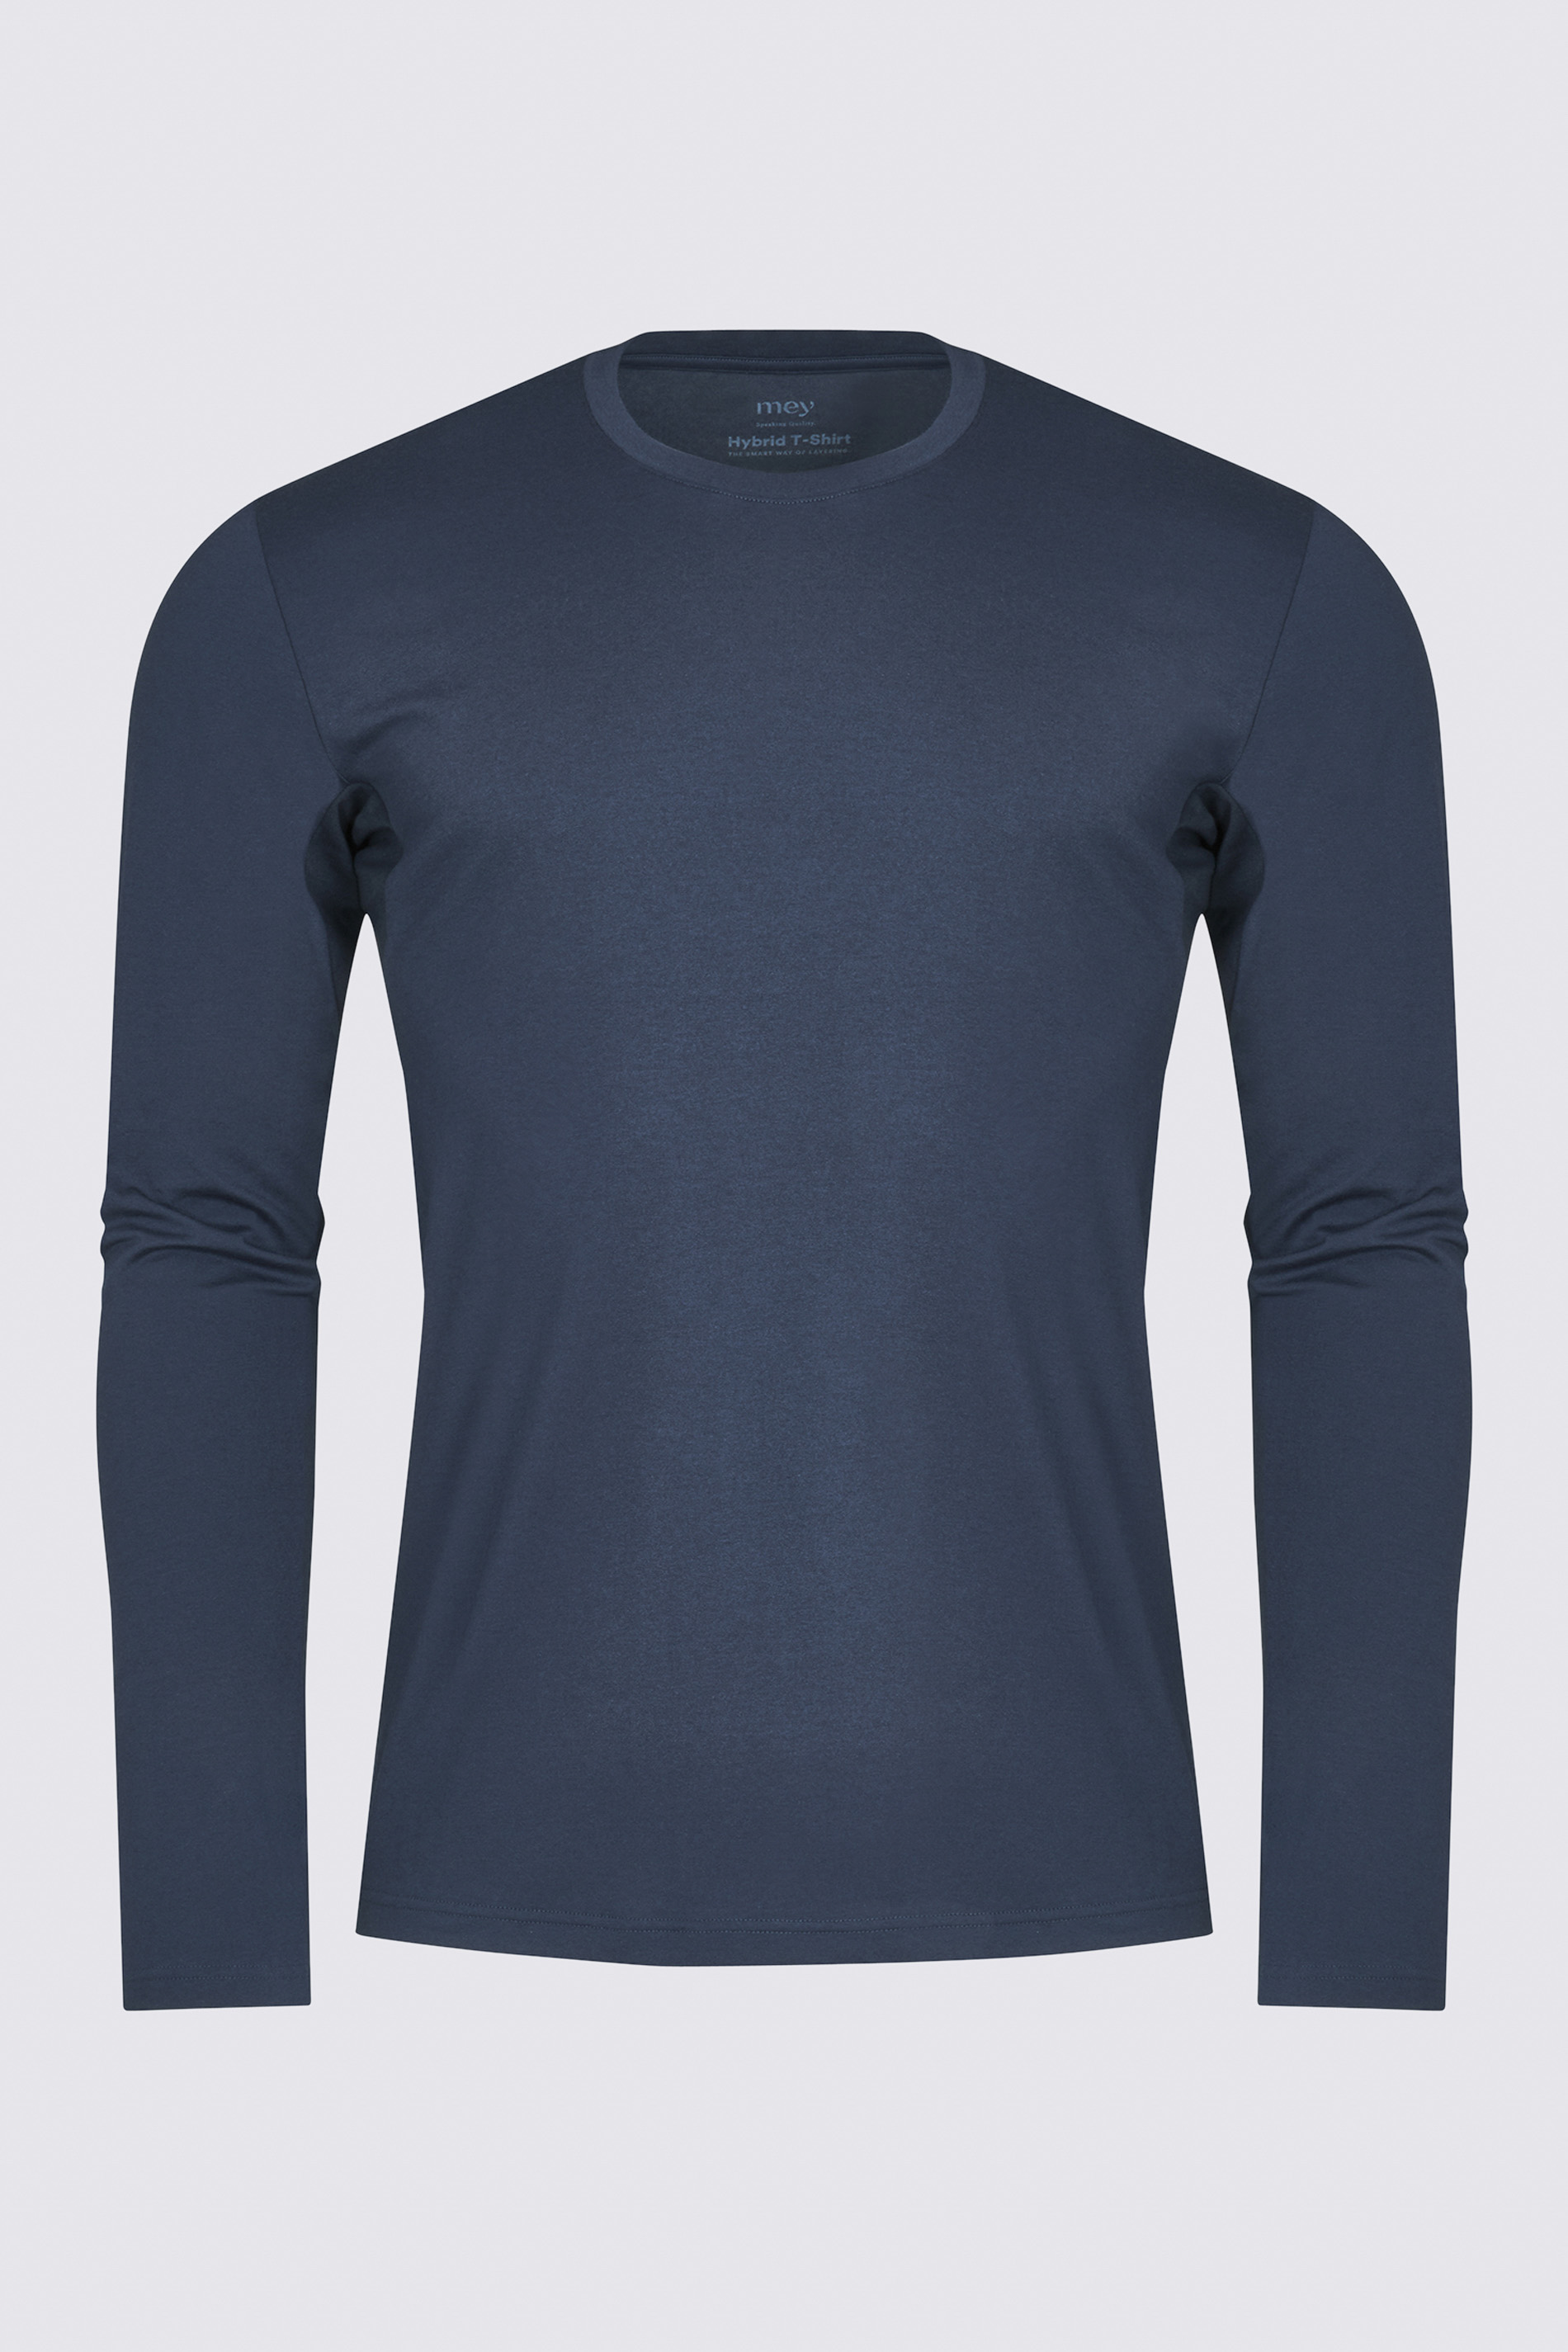 Hybrid-T-Shirt | Long-sleeve Yacht Blue Serie Hybrid T-Shirt Cut Out | mey®